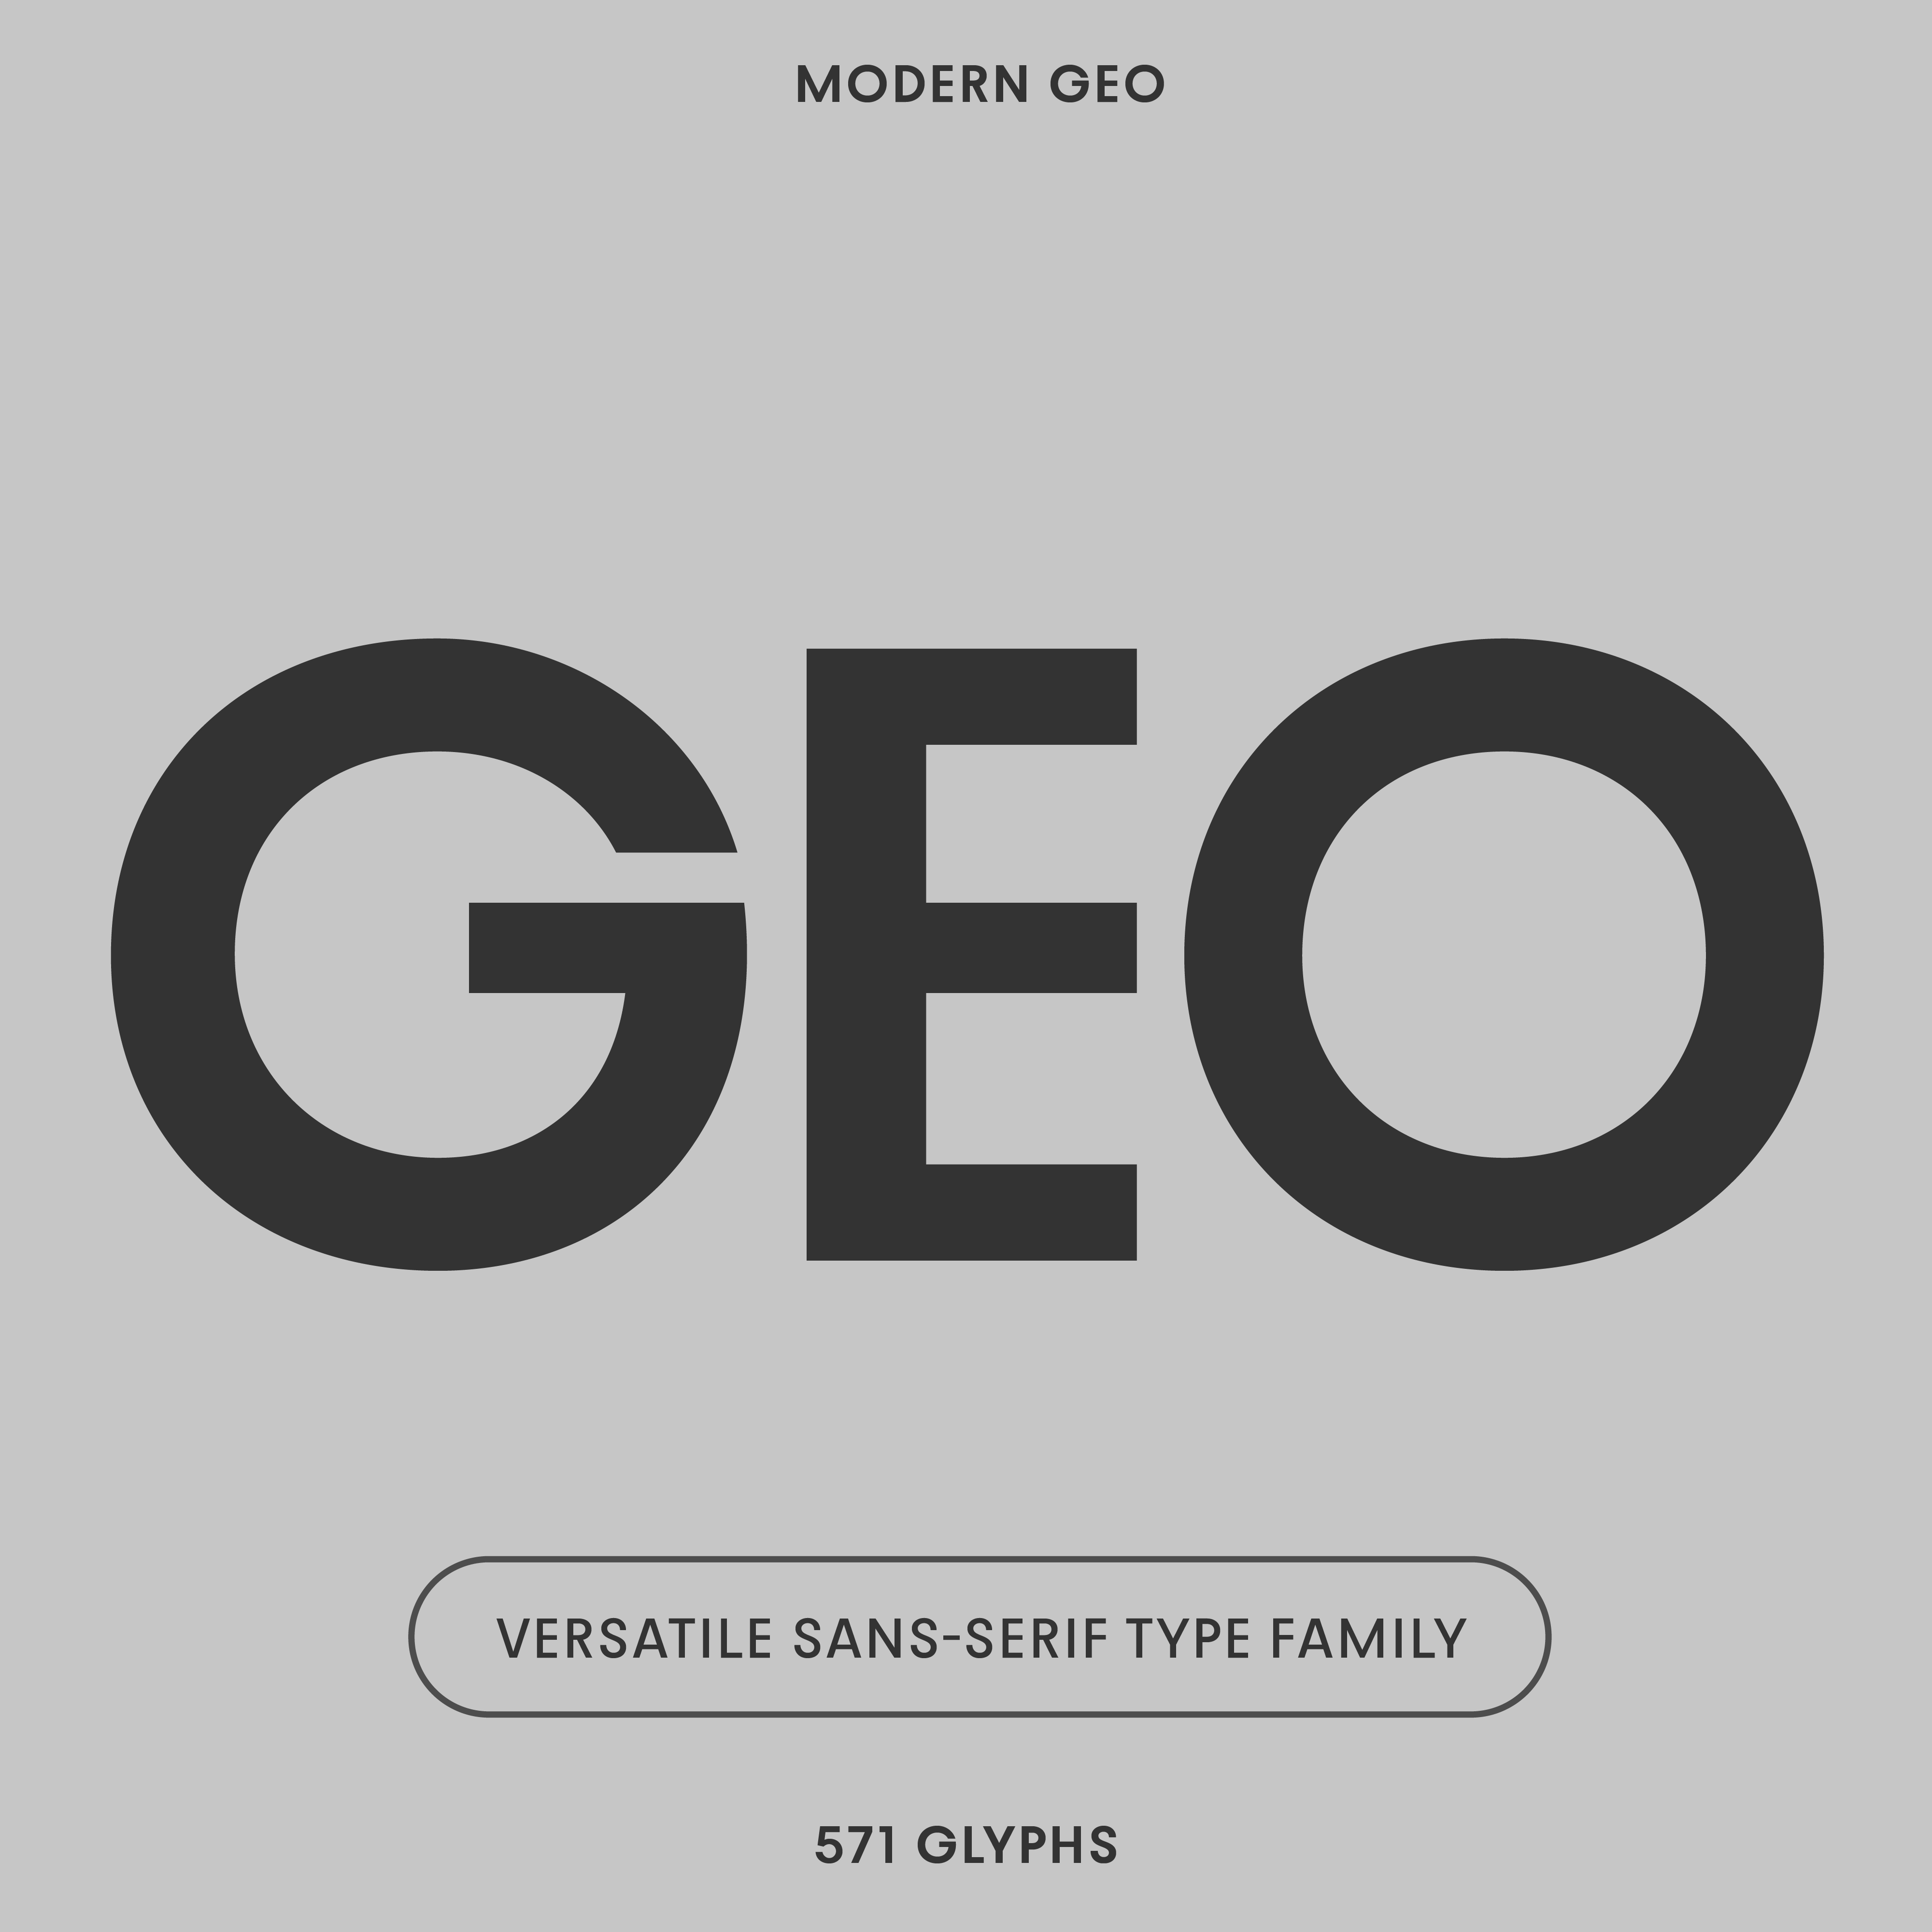 Bauhaus Geo, modern avant-garde typeface